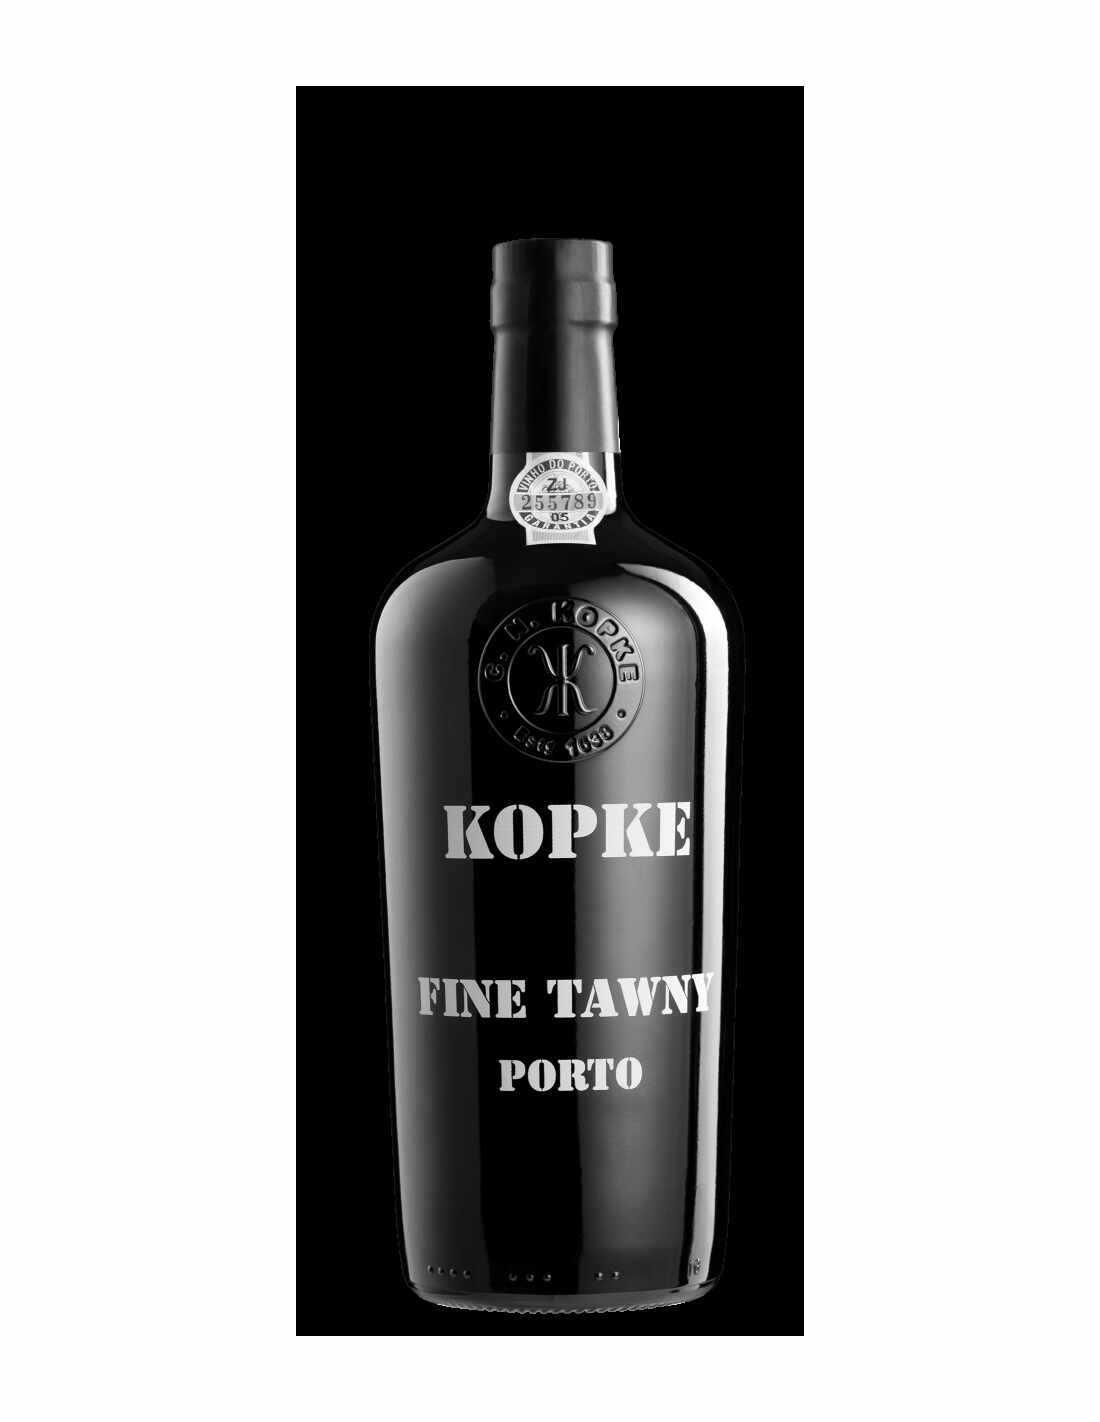 Vin porto rosu dulce, Kopke Tawny Douro, Cupaj, 19.5% alc., 0.75L, Portugalia